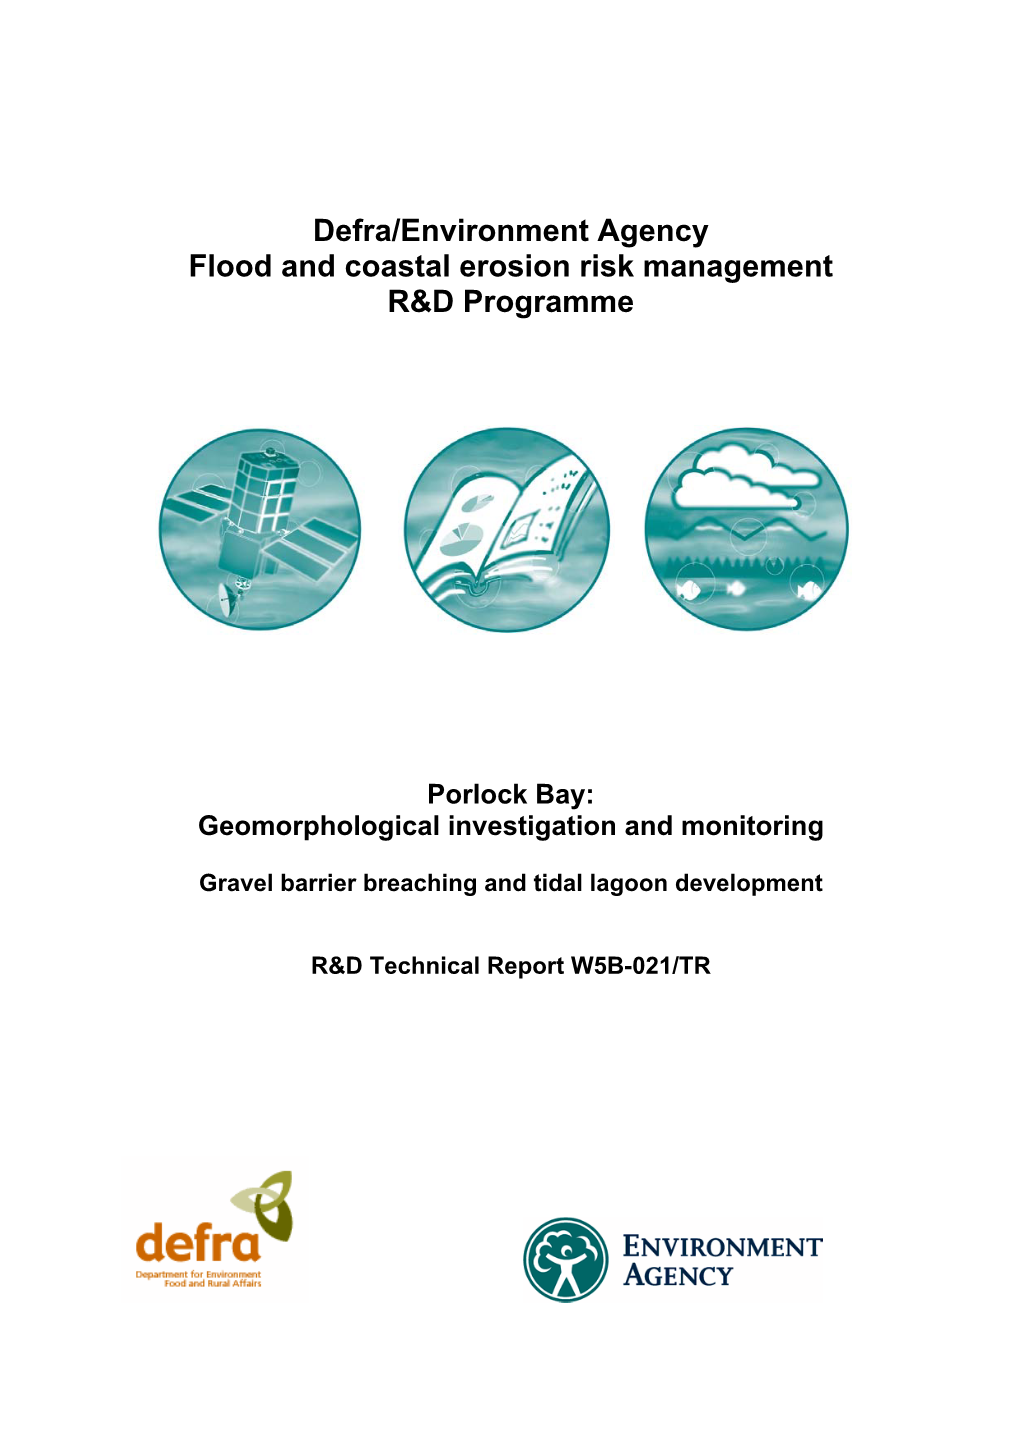 Porlock Bay: Geomorphological Investigation and Monitoring